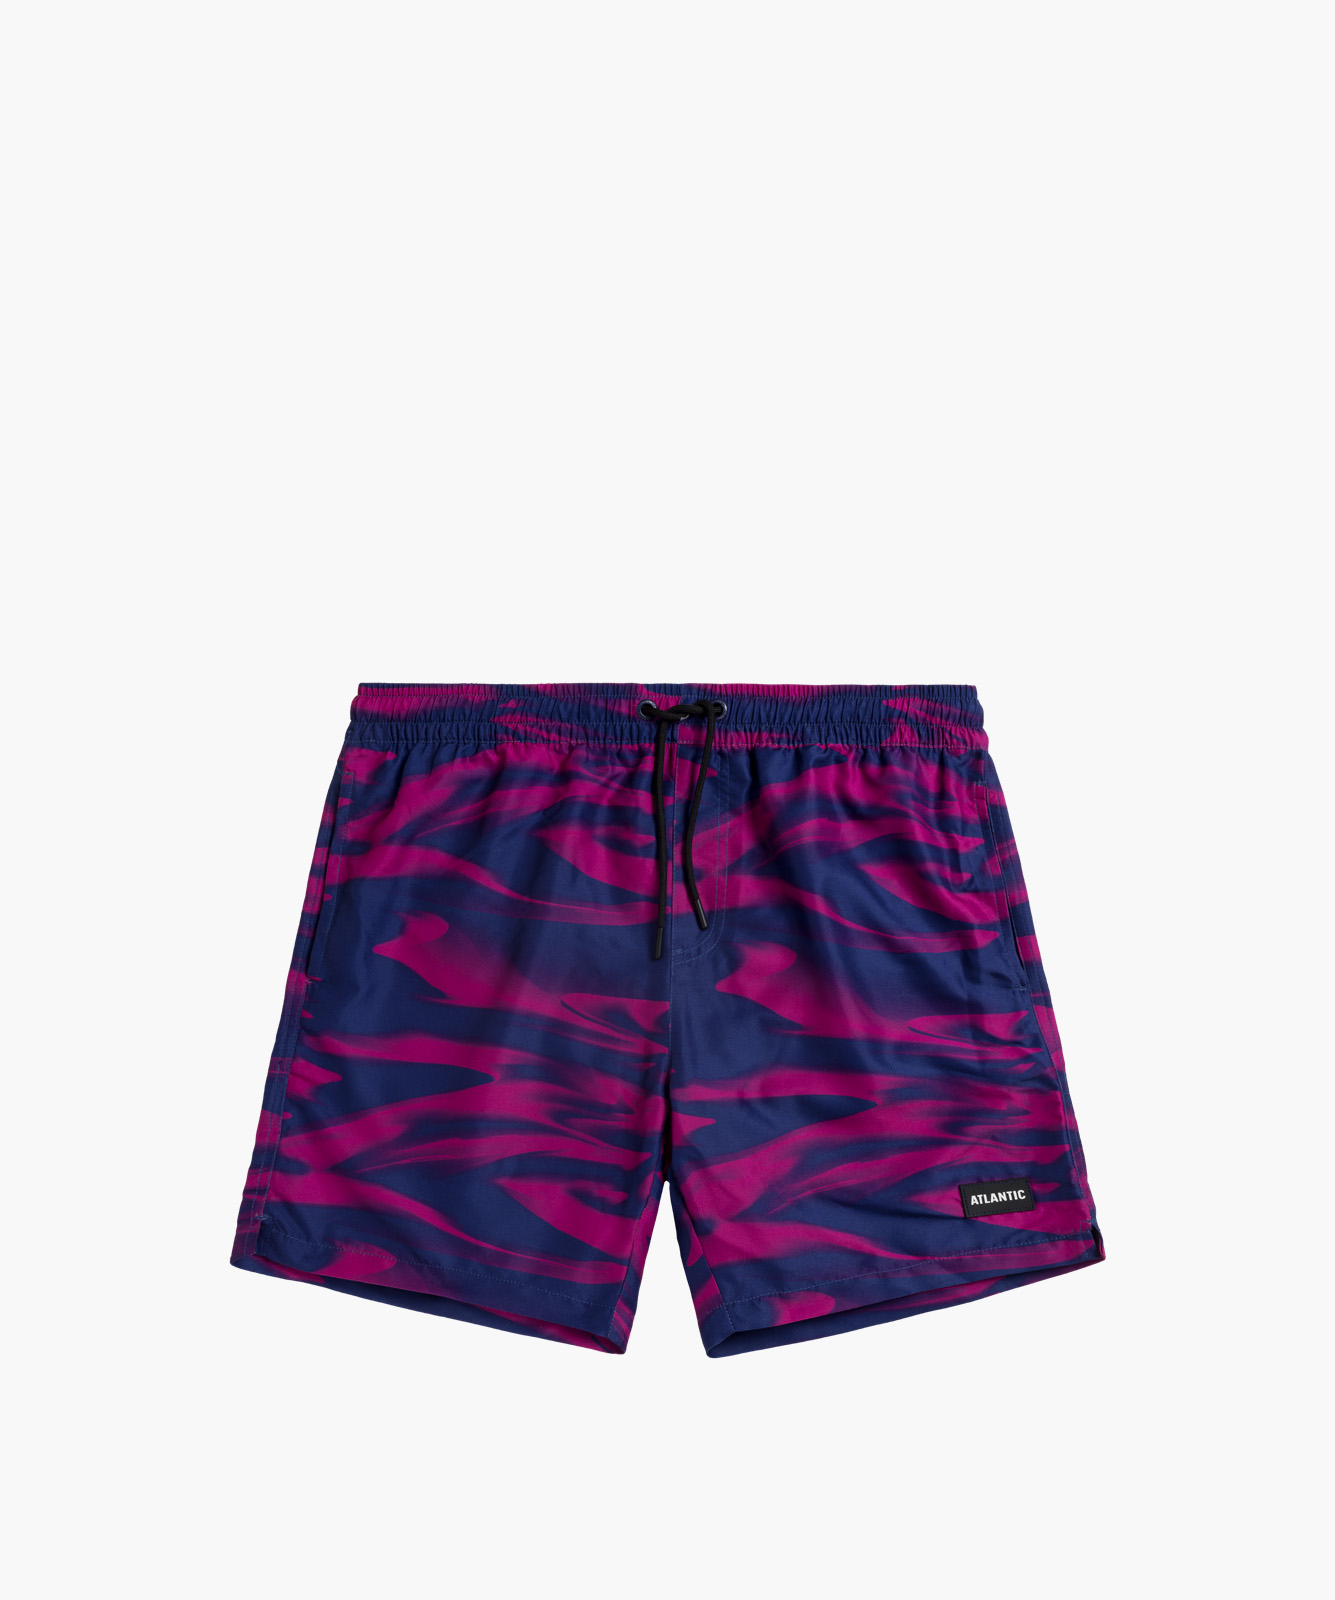 Men's Beach Shorts ATLANTIC - Multicolored